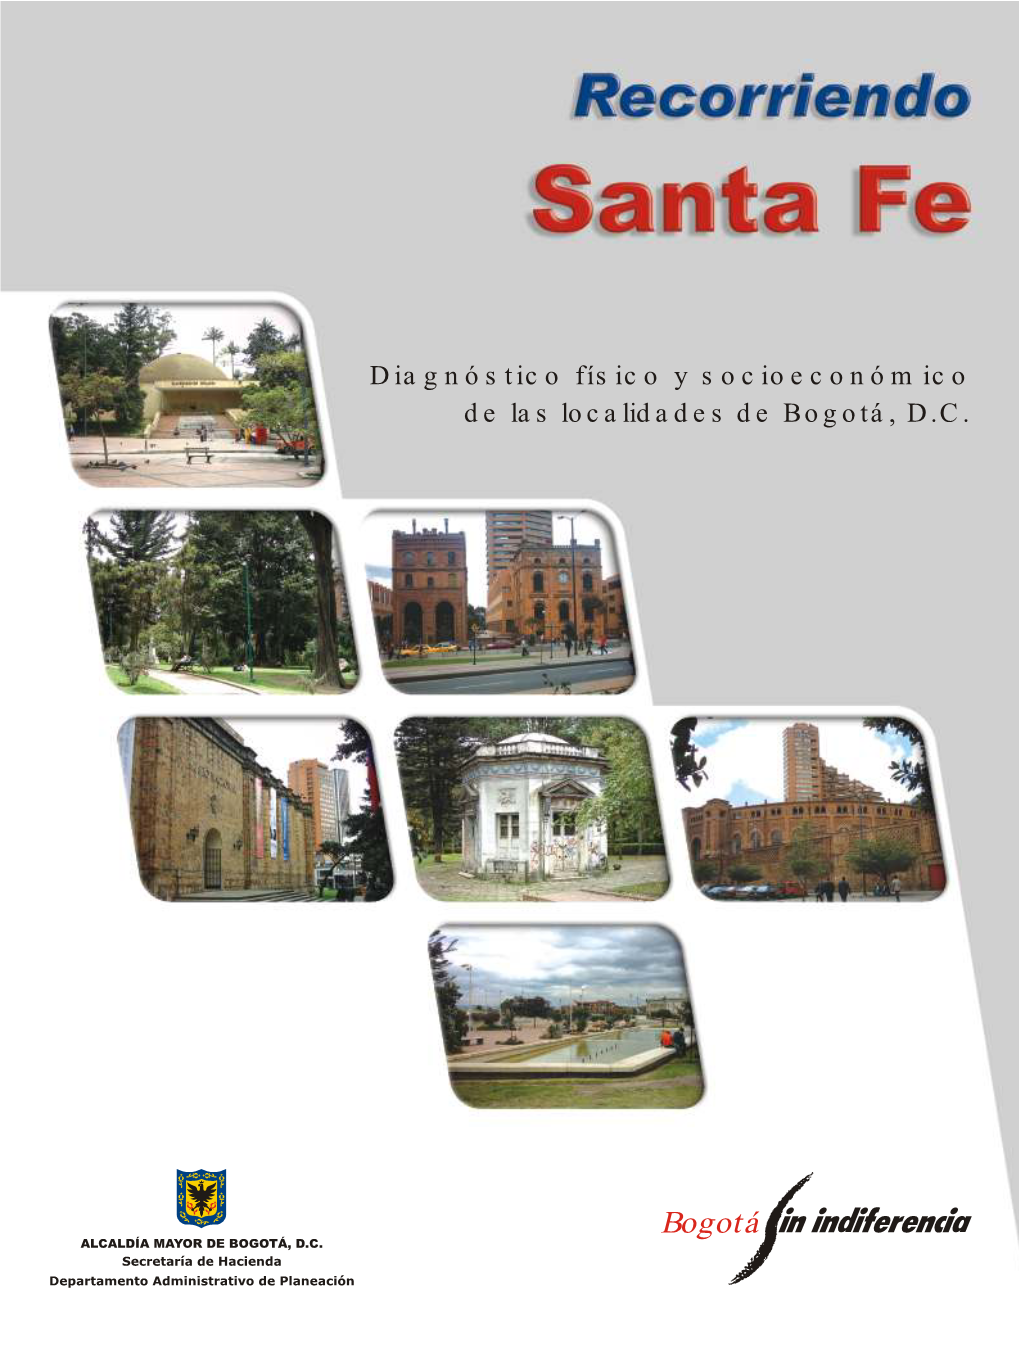 Recorriendo Santa Fe